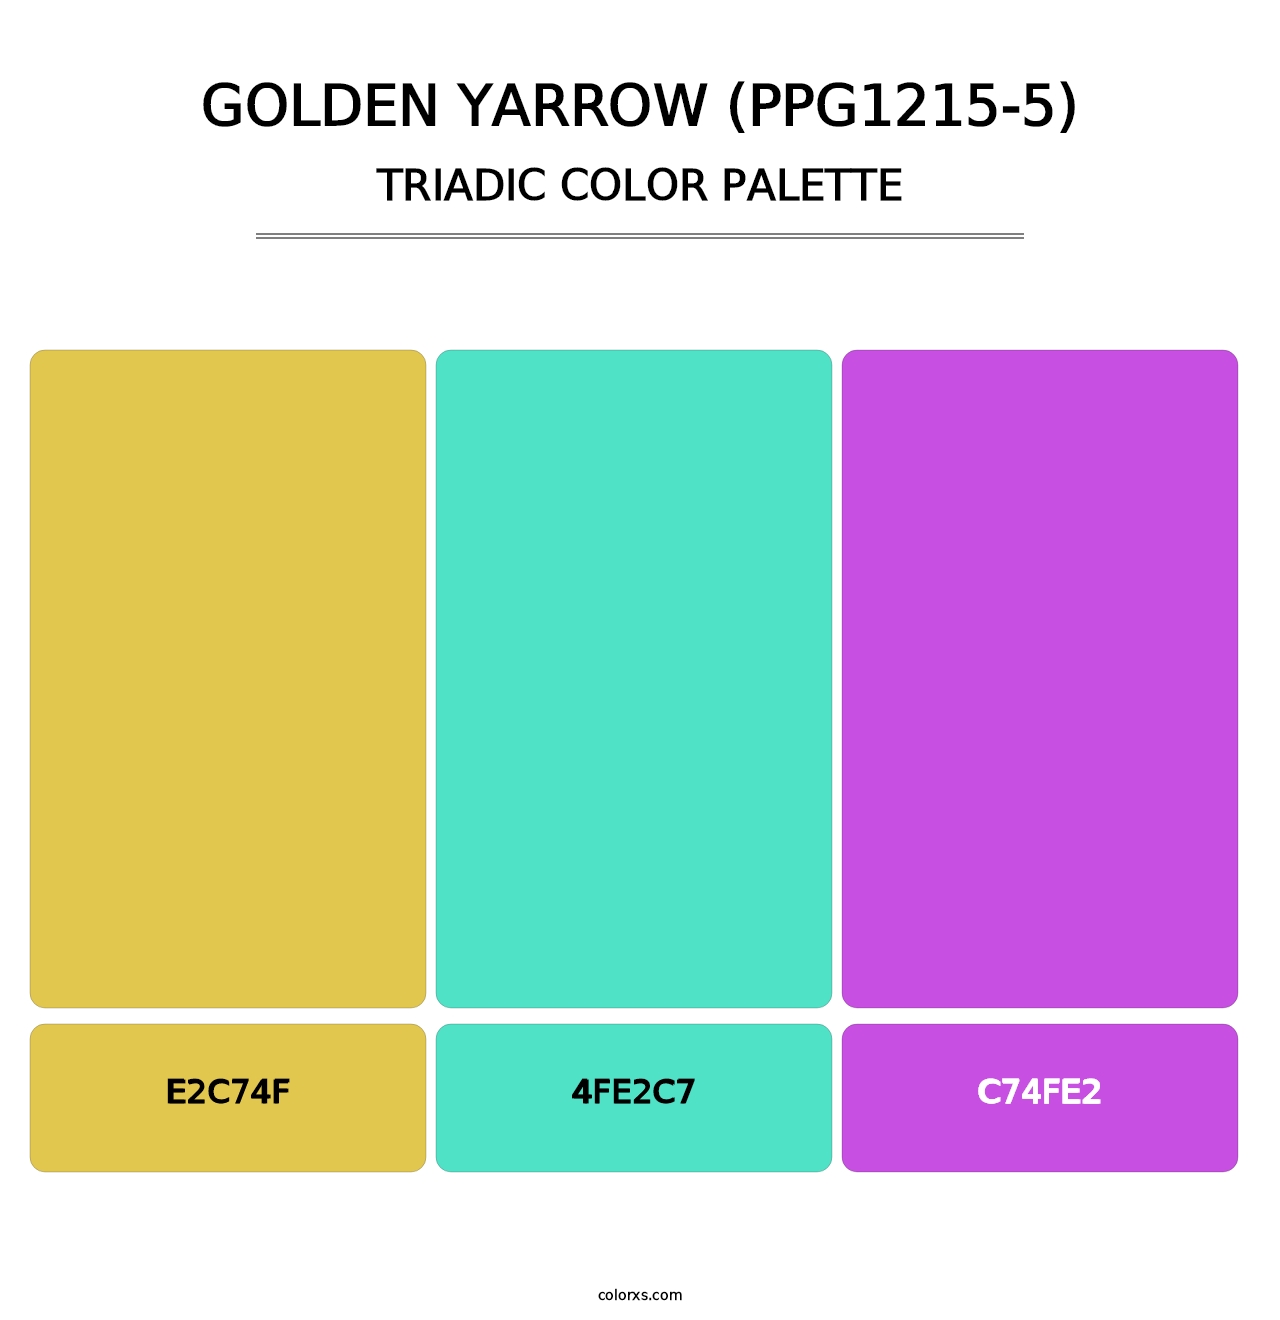 Golden Yarrow (PPG1215-5) - Triadic Color Palette